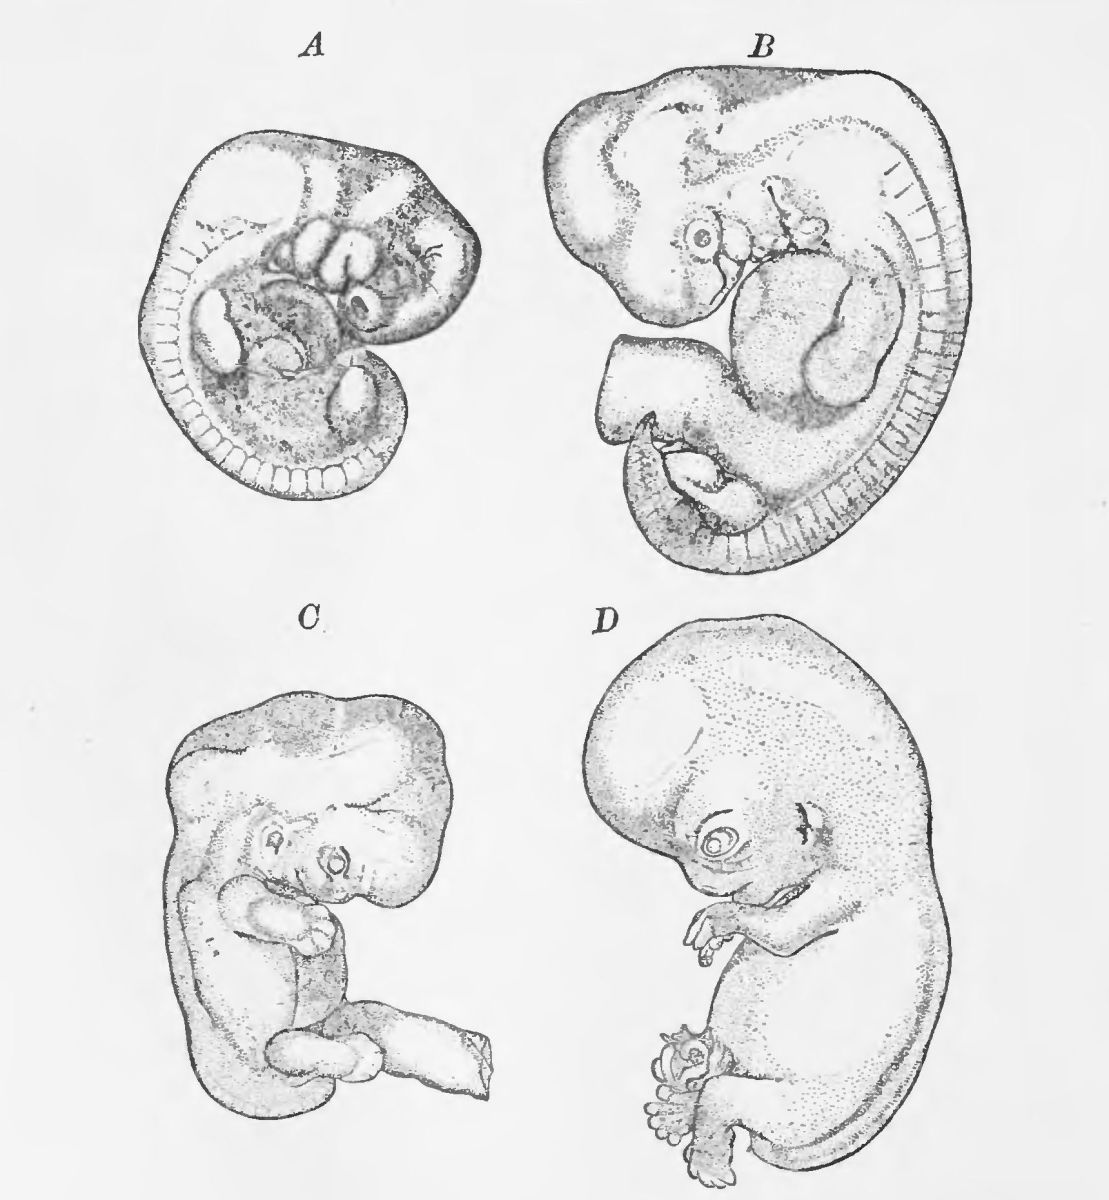 An embryo at 3 weeks gestation (A), 4 weeks gestation (B), 8 weeks gestation (C), and approximately 10 weeks gestation (D).